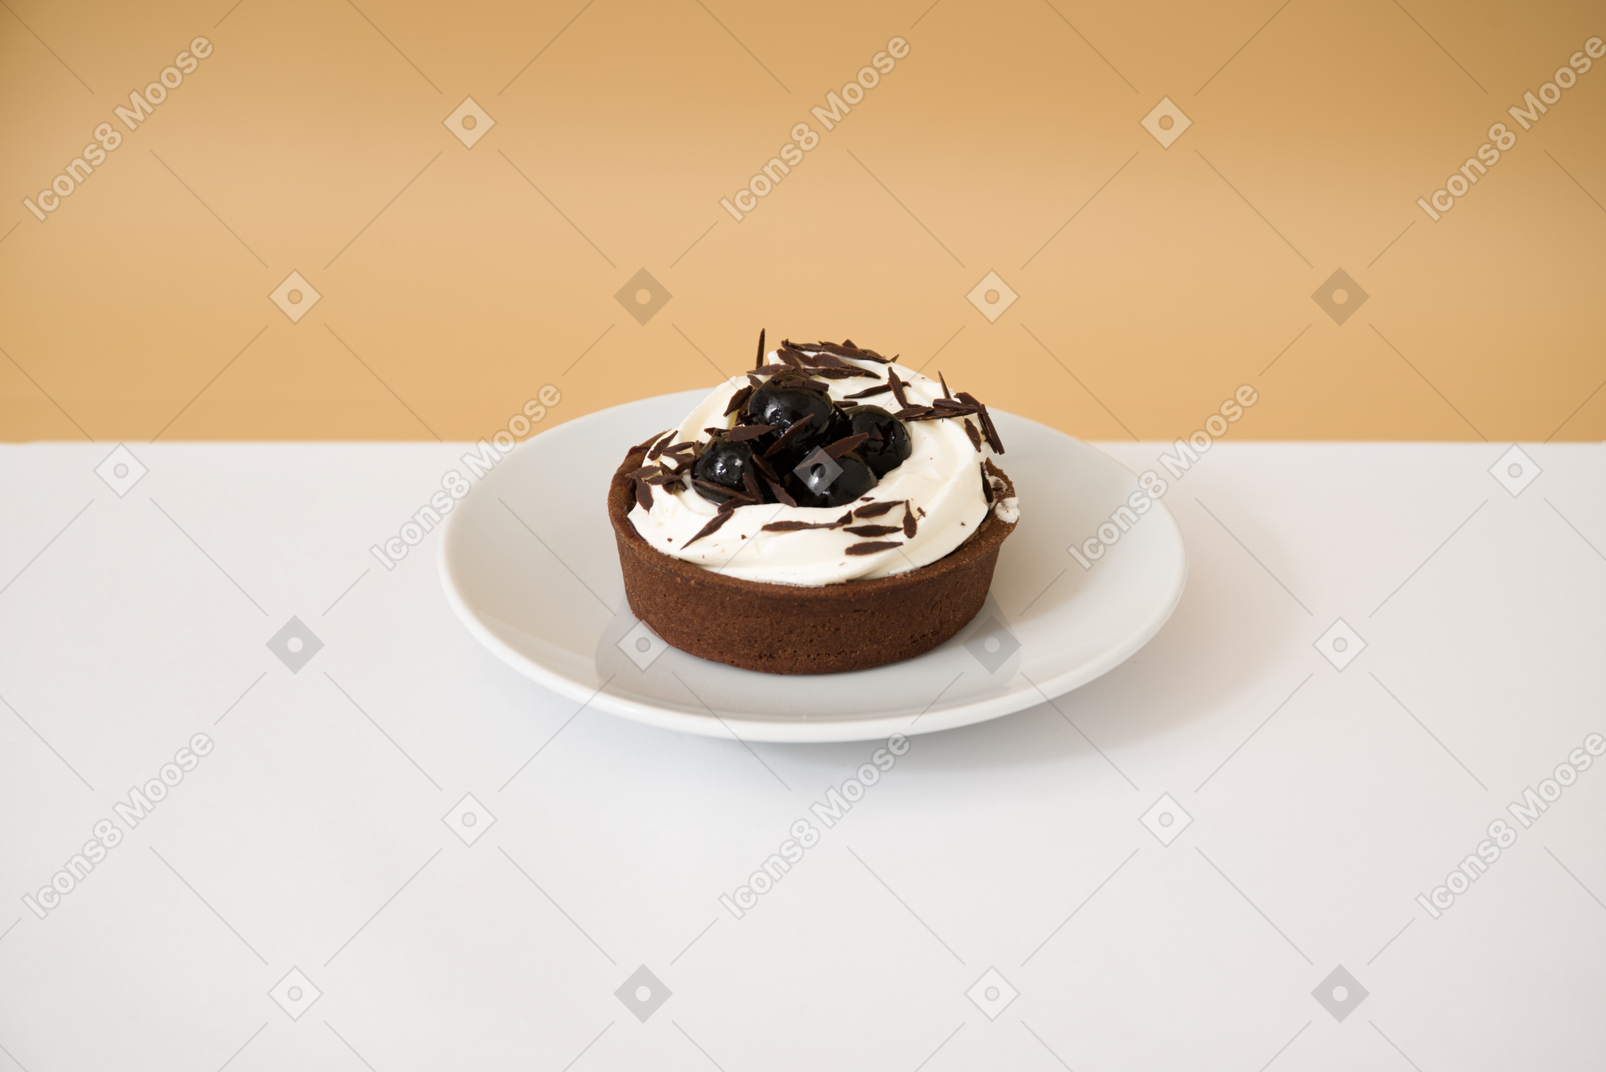 Chocolate berry cake